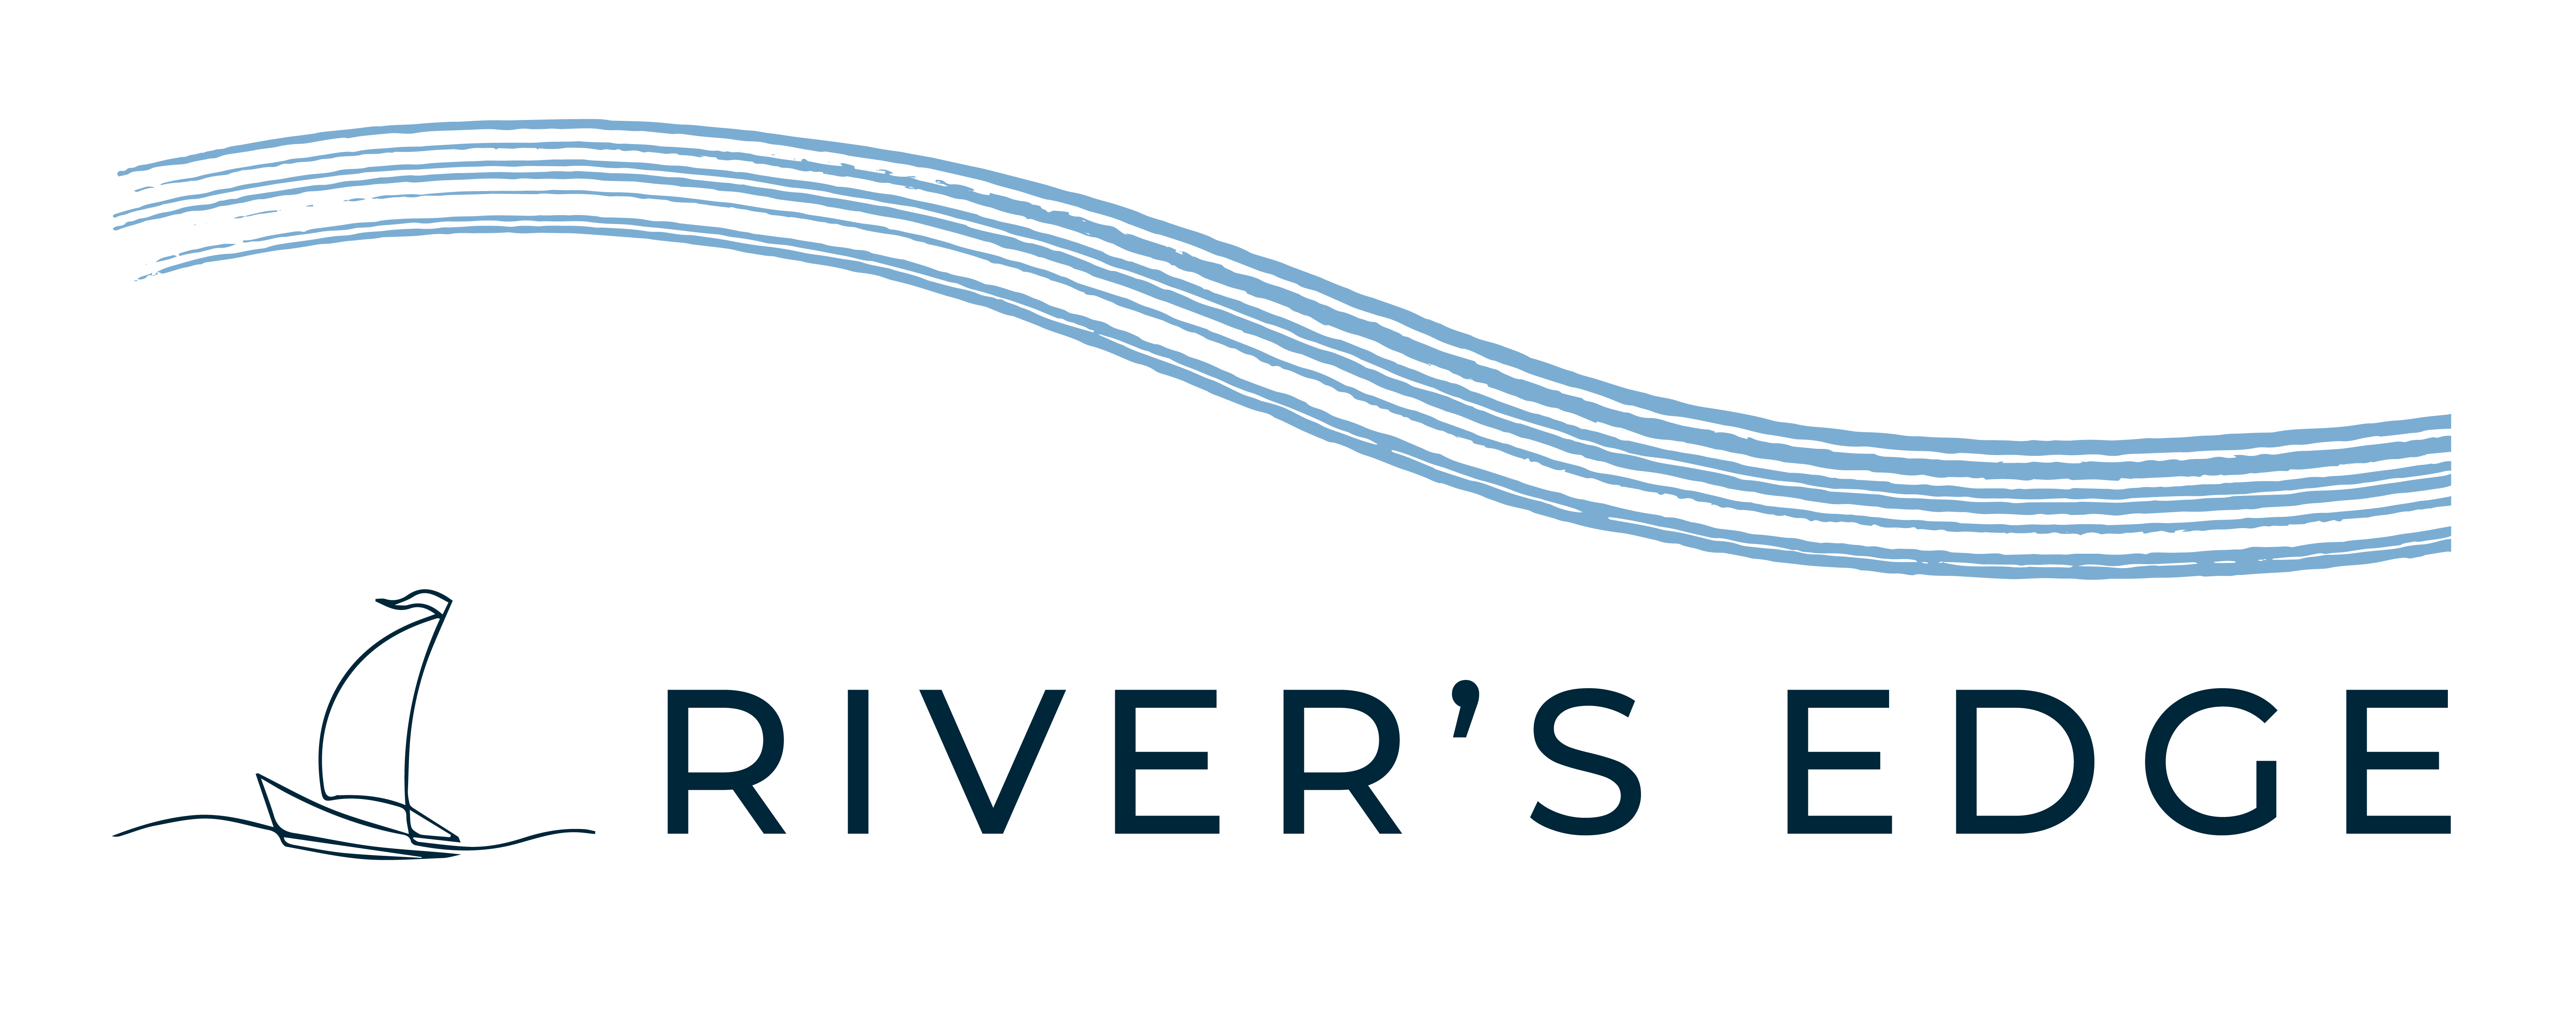 River's Edge - Piroli Group Developments